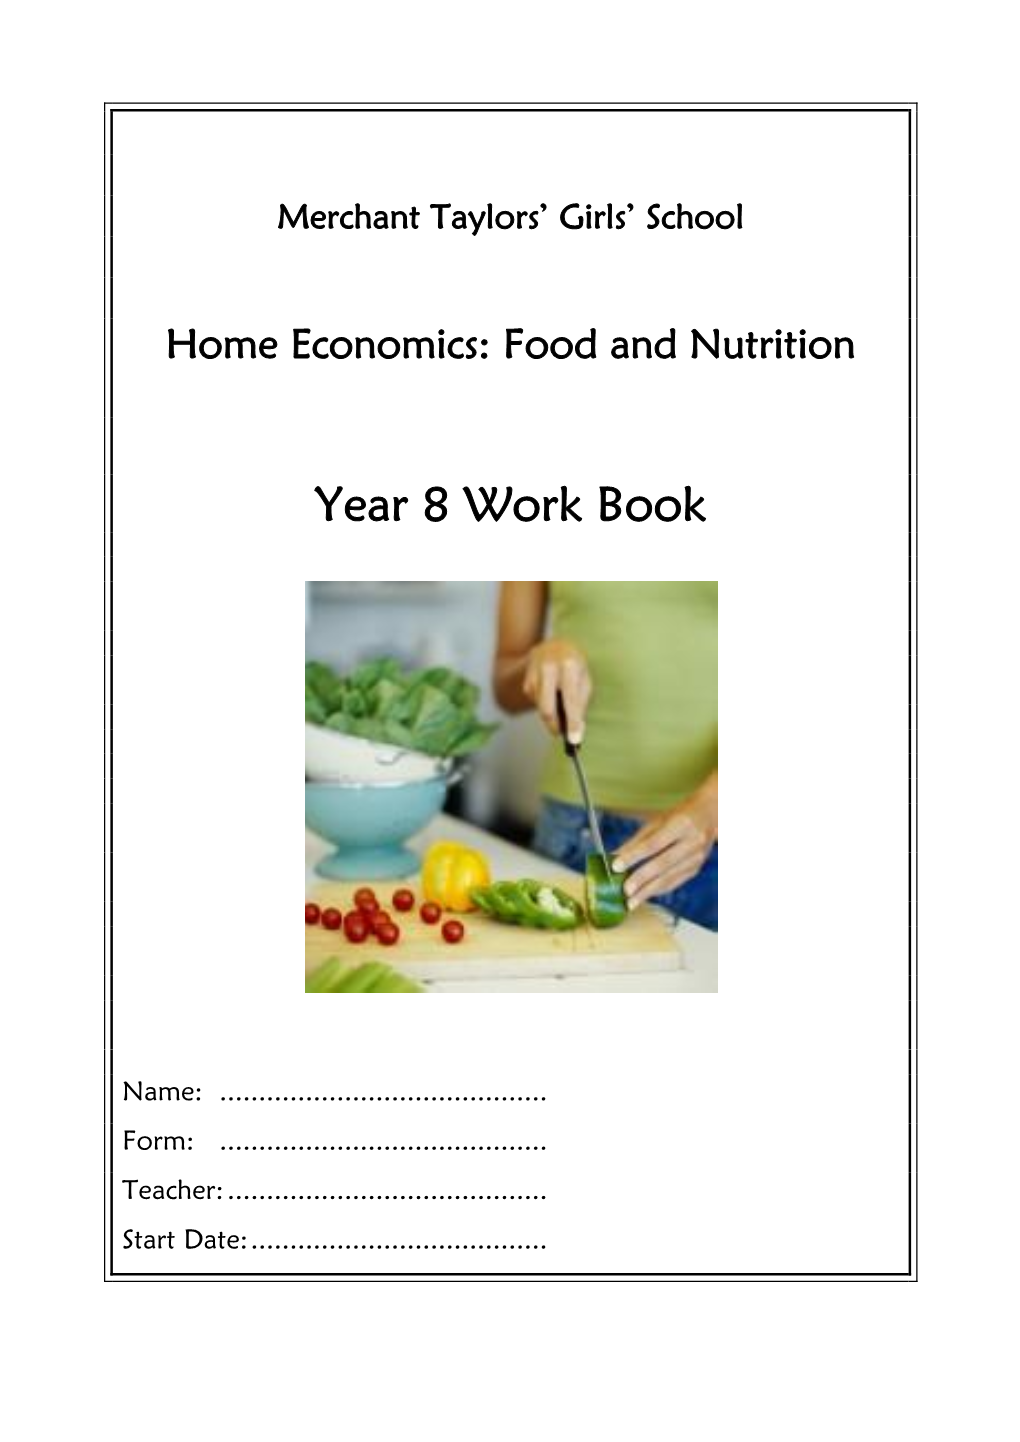 Year 8 Work Book